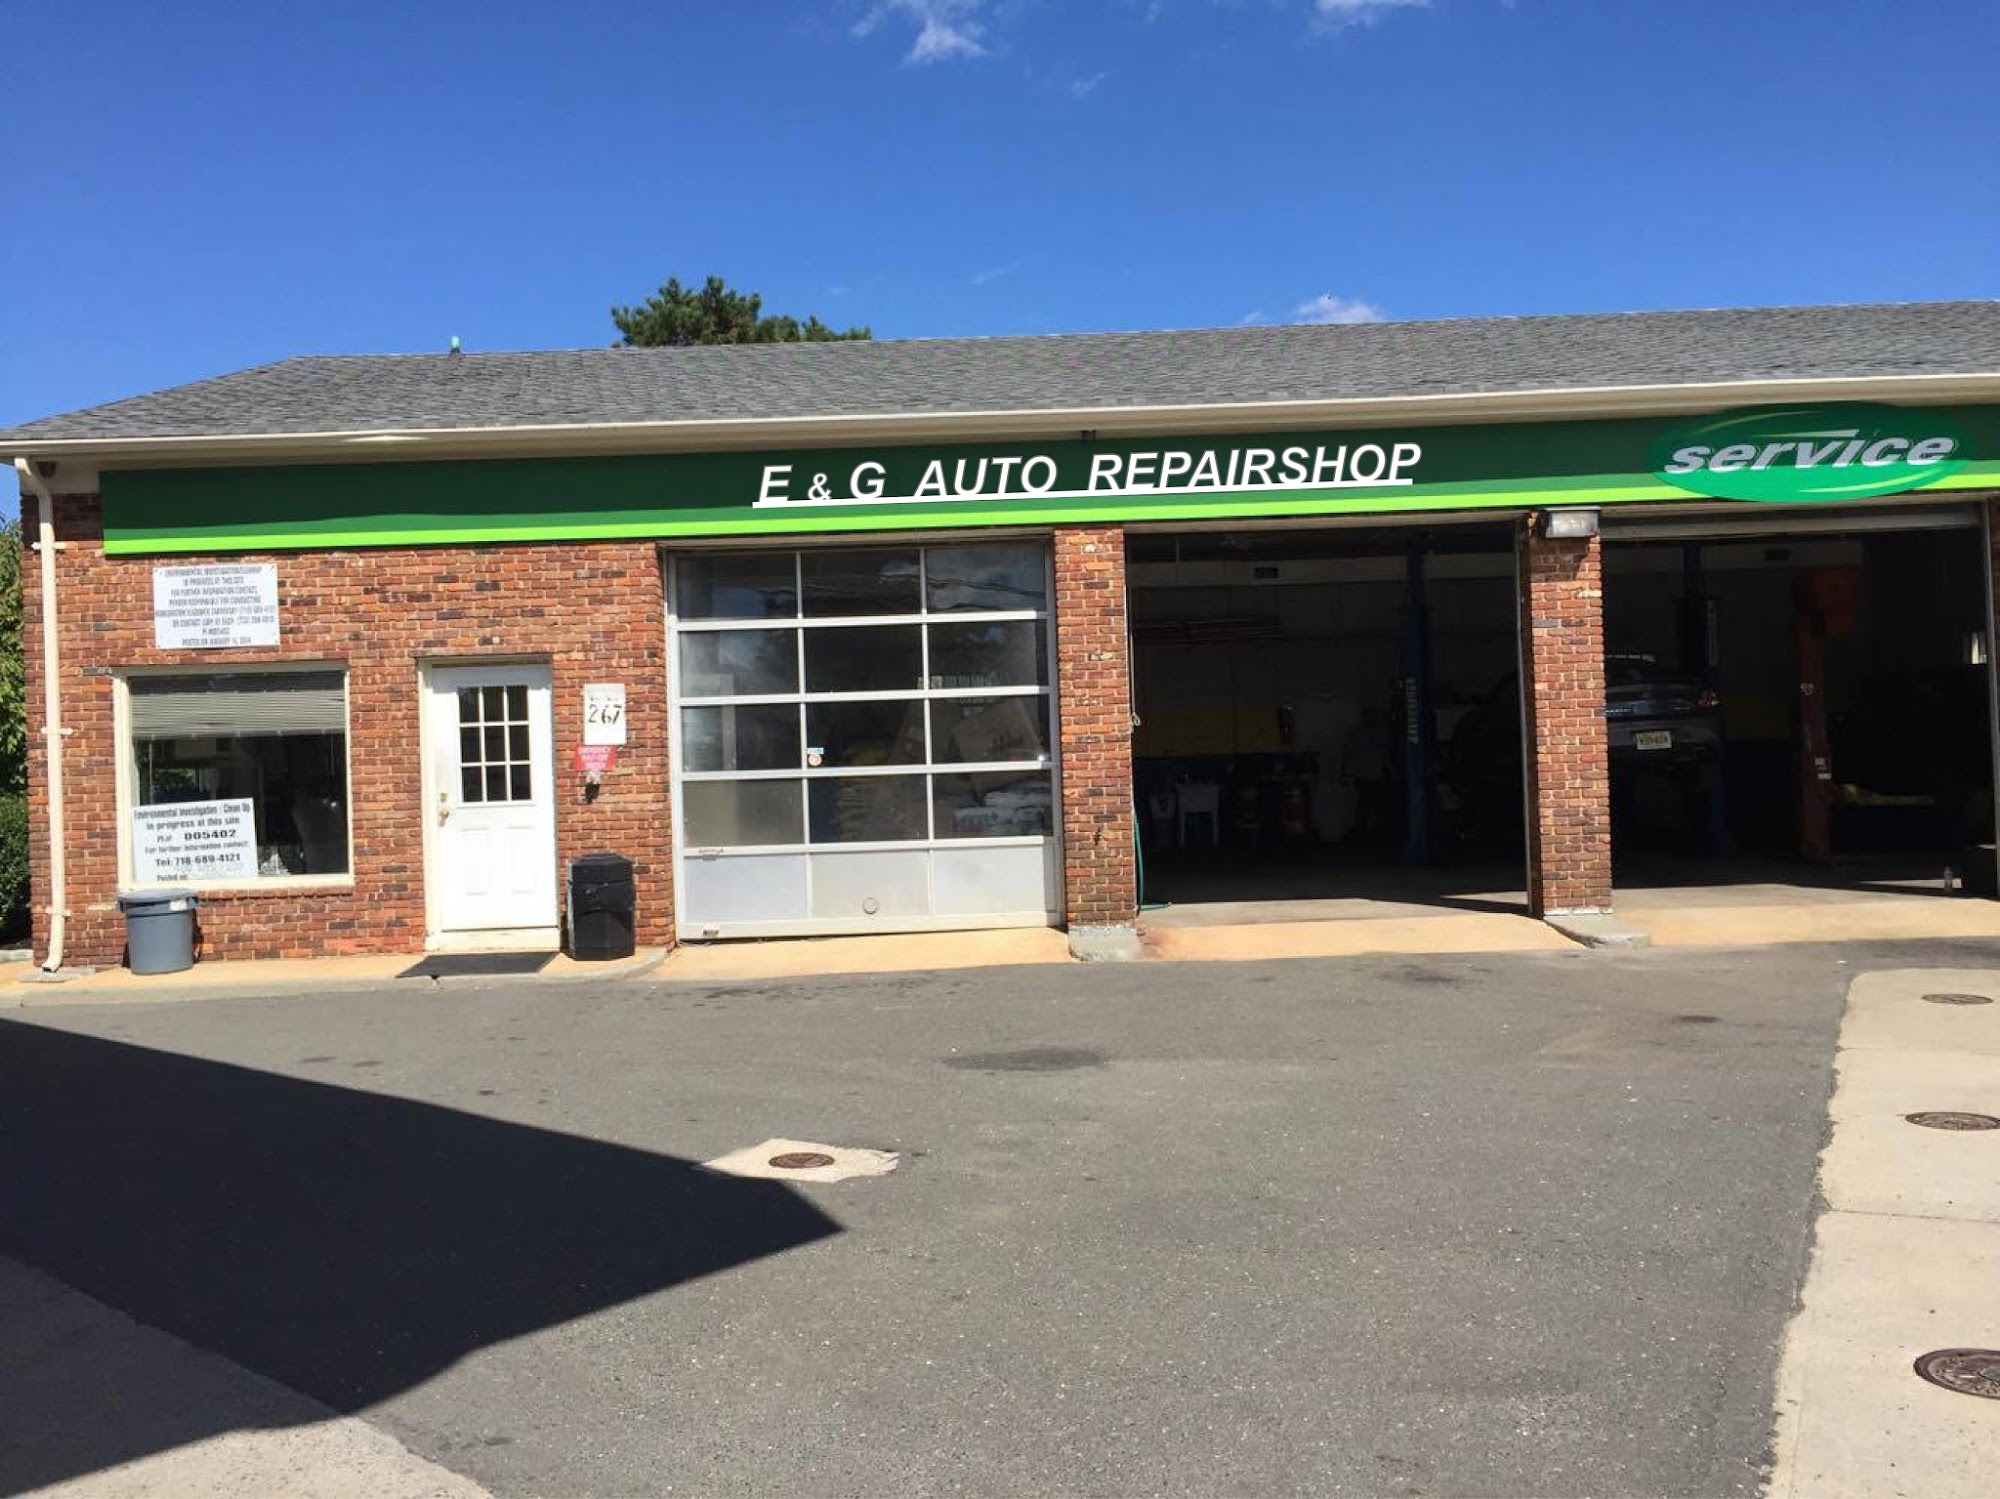 E & G Auto Repairshop